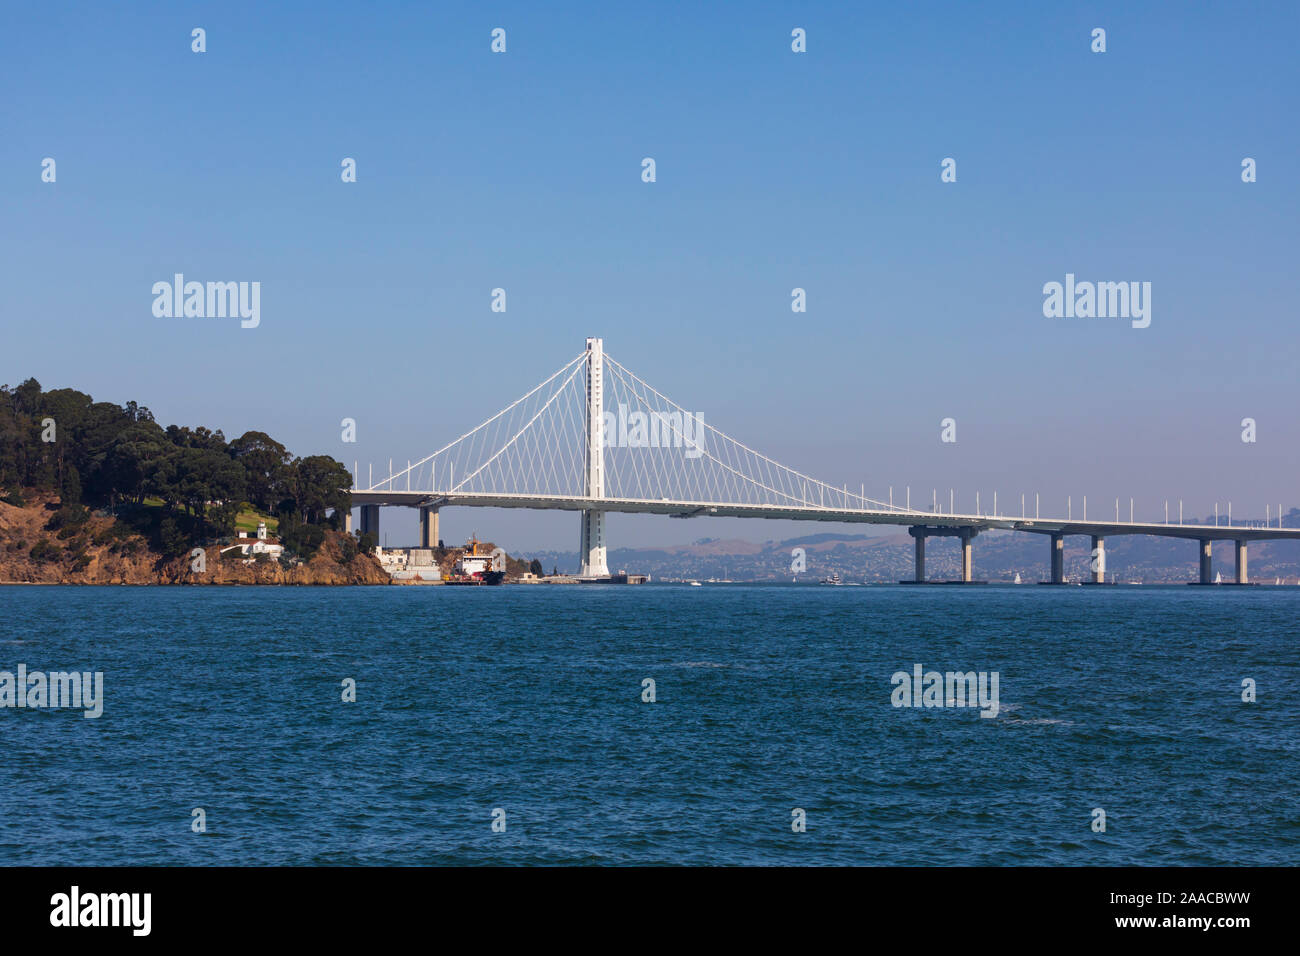 Oakland Bay Bridge, östlichen Abschnitt, San Francisco Bay, Kalifornien, USA Stockfoto